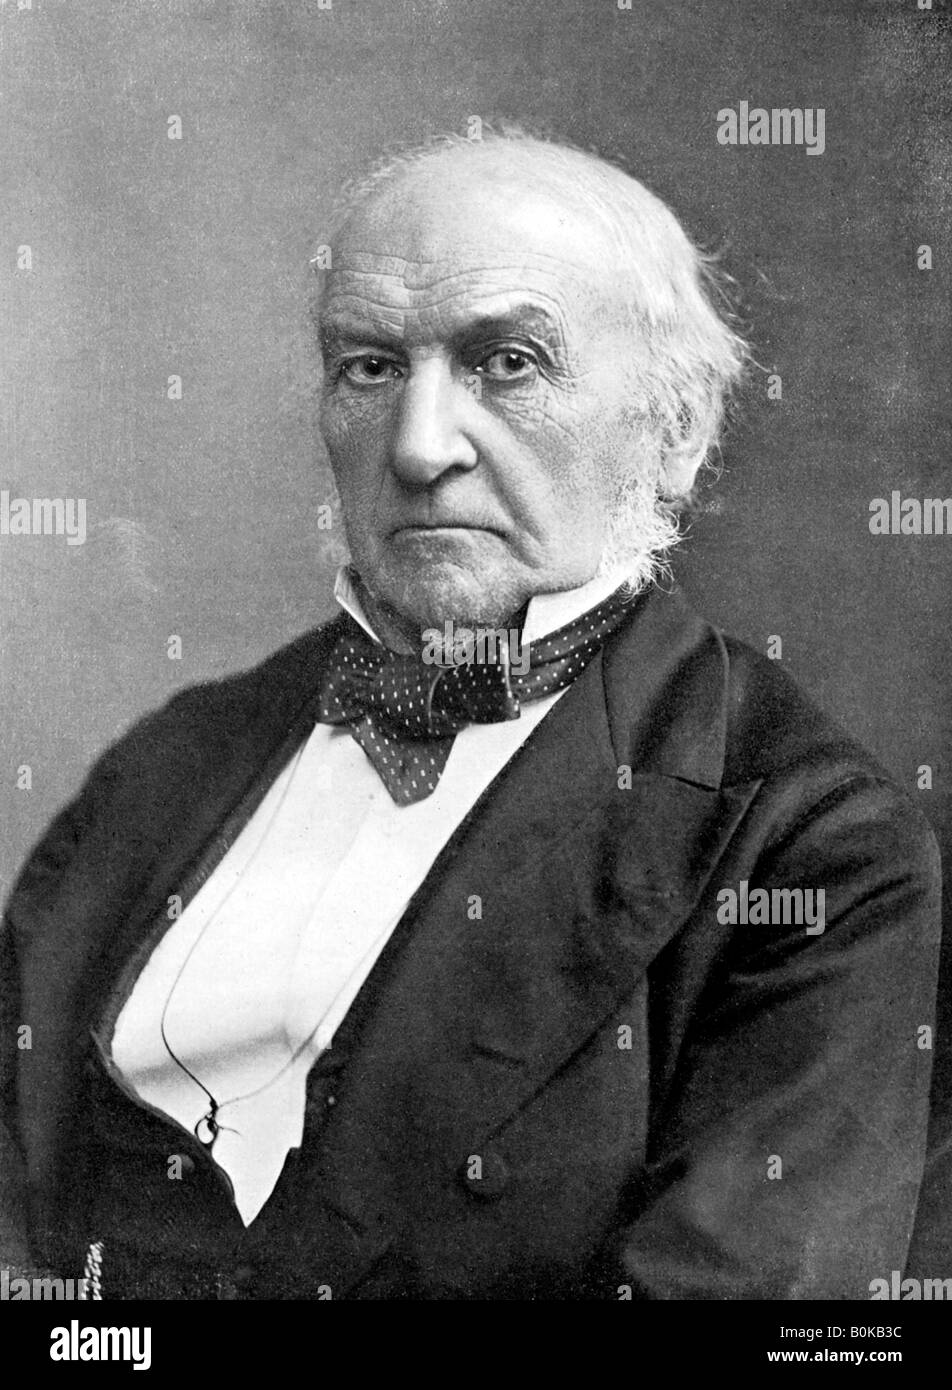 William Ewart Gladstone, 19th century British Liberal statesman and prime minister, c1905.Artist: London Stereoscopic & Photographic Co Stock Photo